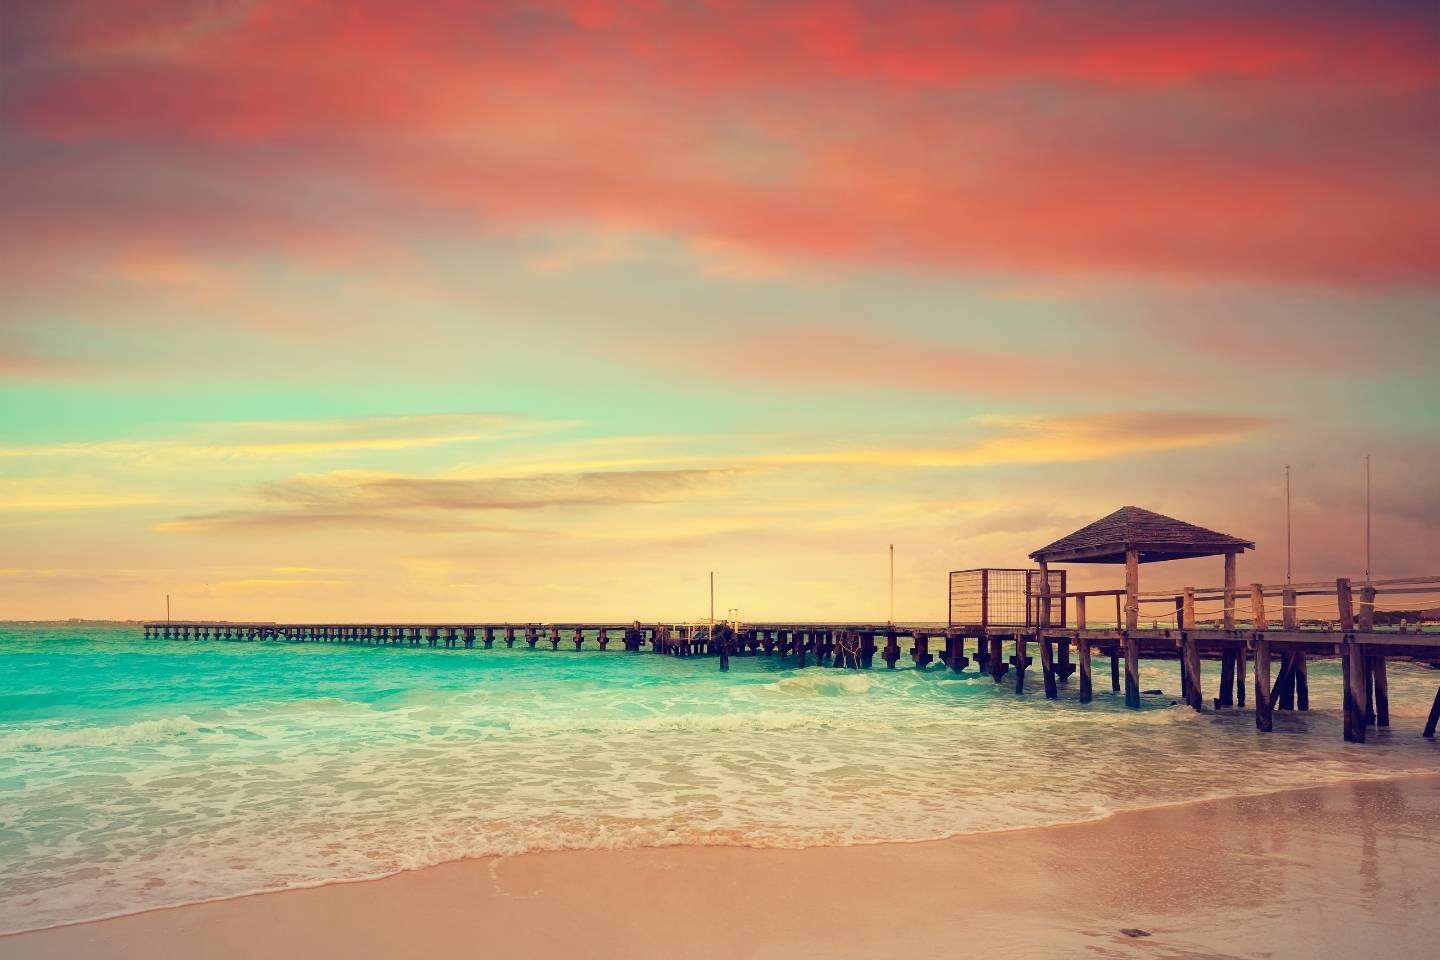 Cancun Caracol beach sunset in Mexico at Hotel zone hotelera.